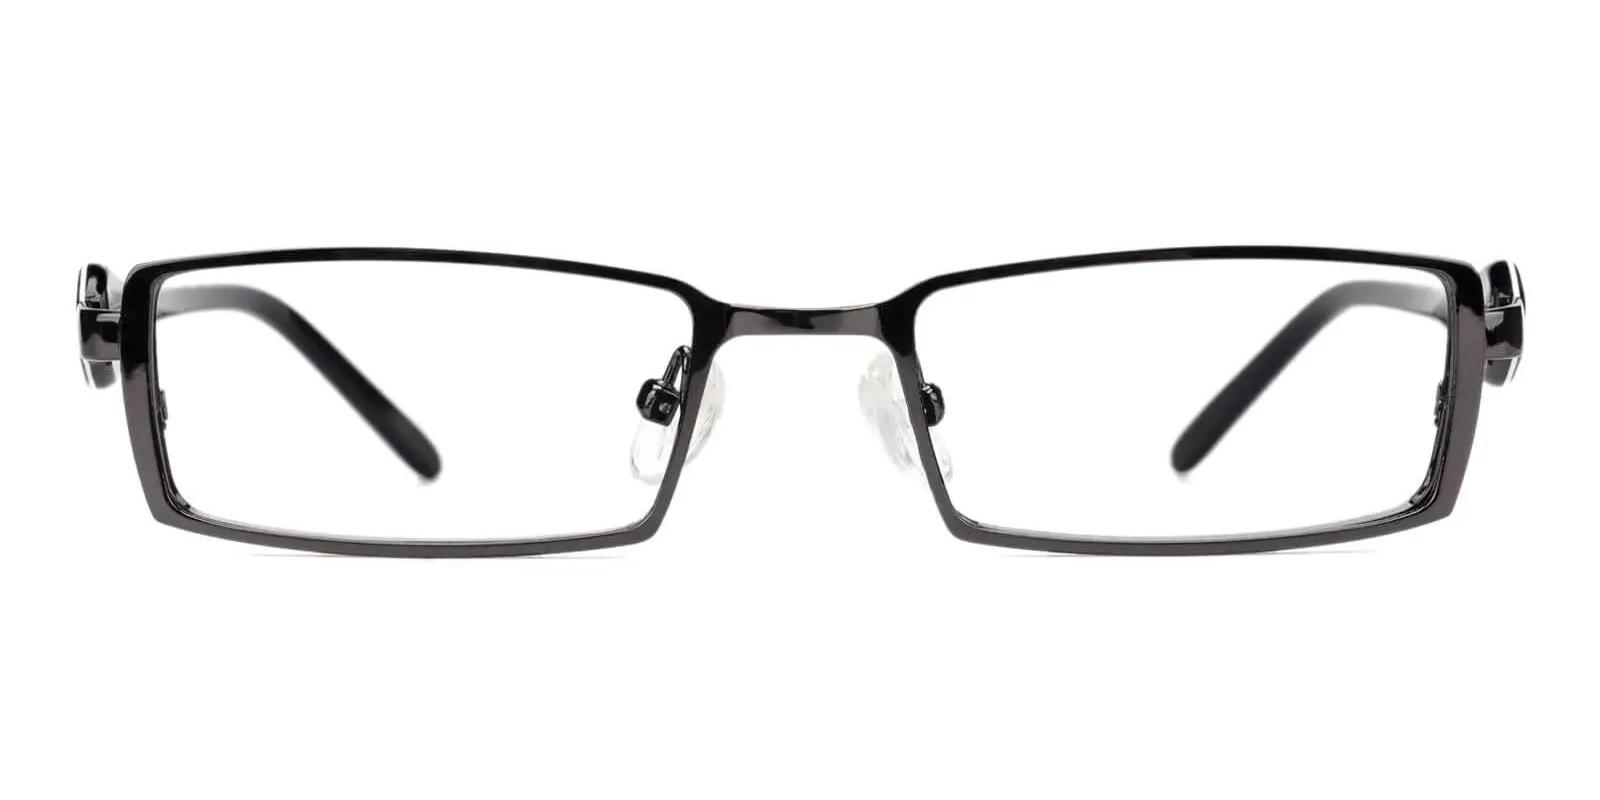 Kids-Selena Gun Metal Eyeglasses , Fashion , NosePads , SpringHinges Frames from ABBE Glasses